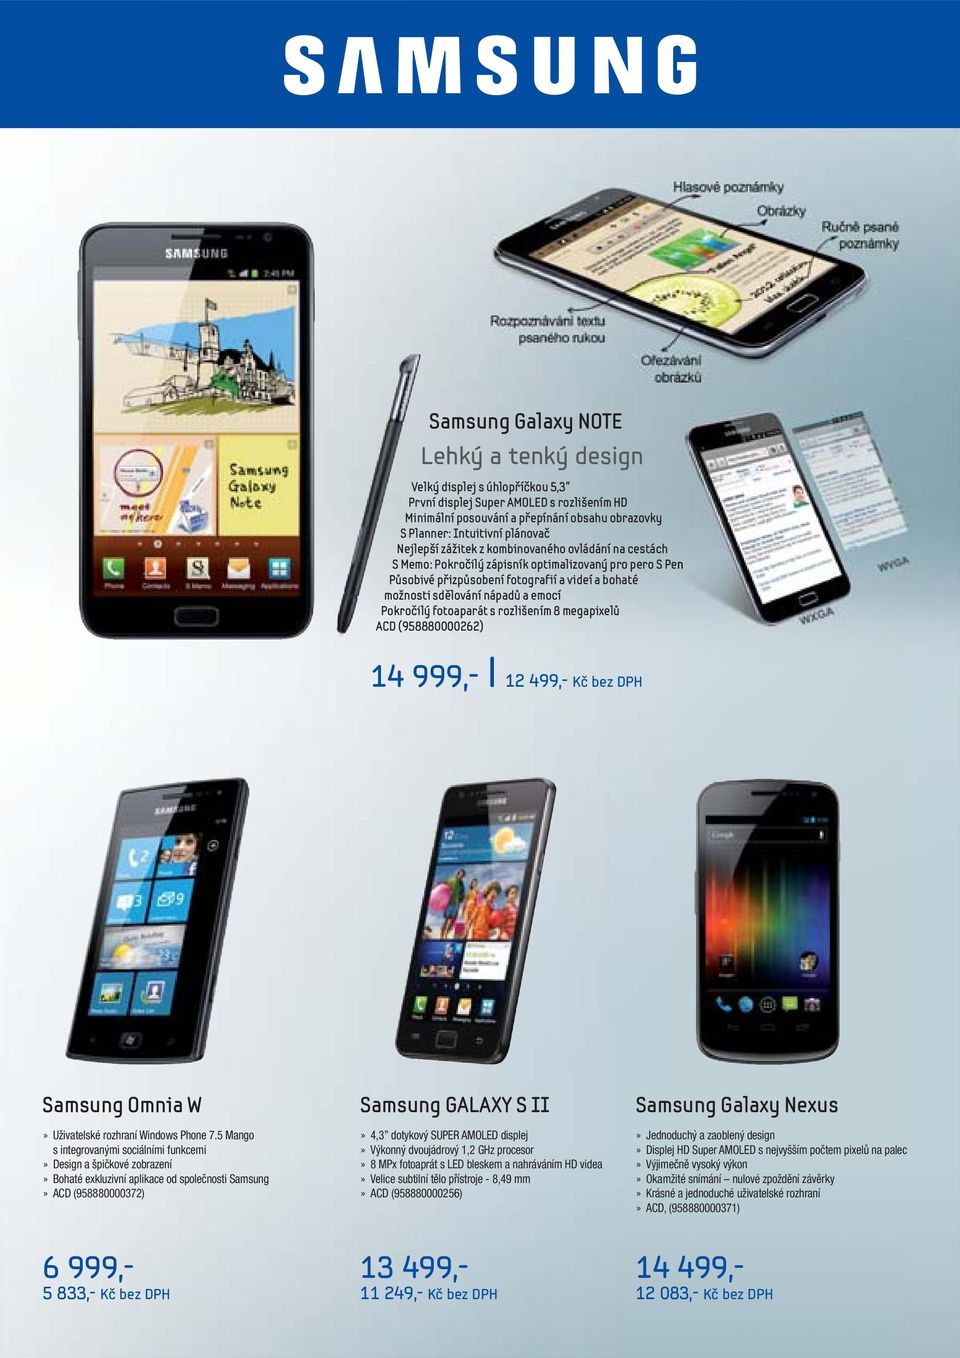 Pokročilý fotoaparát s rozlišením 8 megapixelů ACD (958880000262) 14 999,- l 12 499,- Kč bez DPH Samsung Omnia W Samsung GALAXY S II Samsung Galaxy Nexus» Uživatelské rozhraní Windows Phone 7.